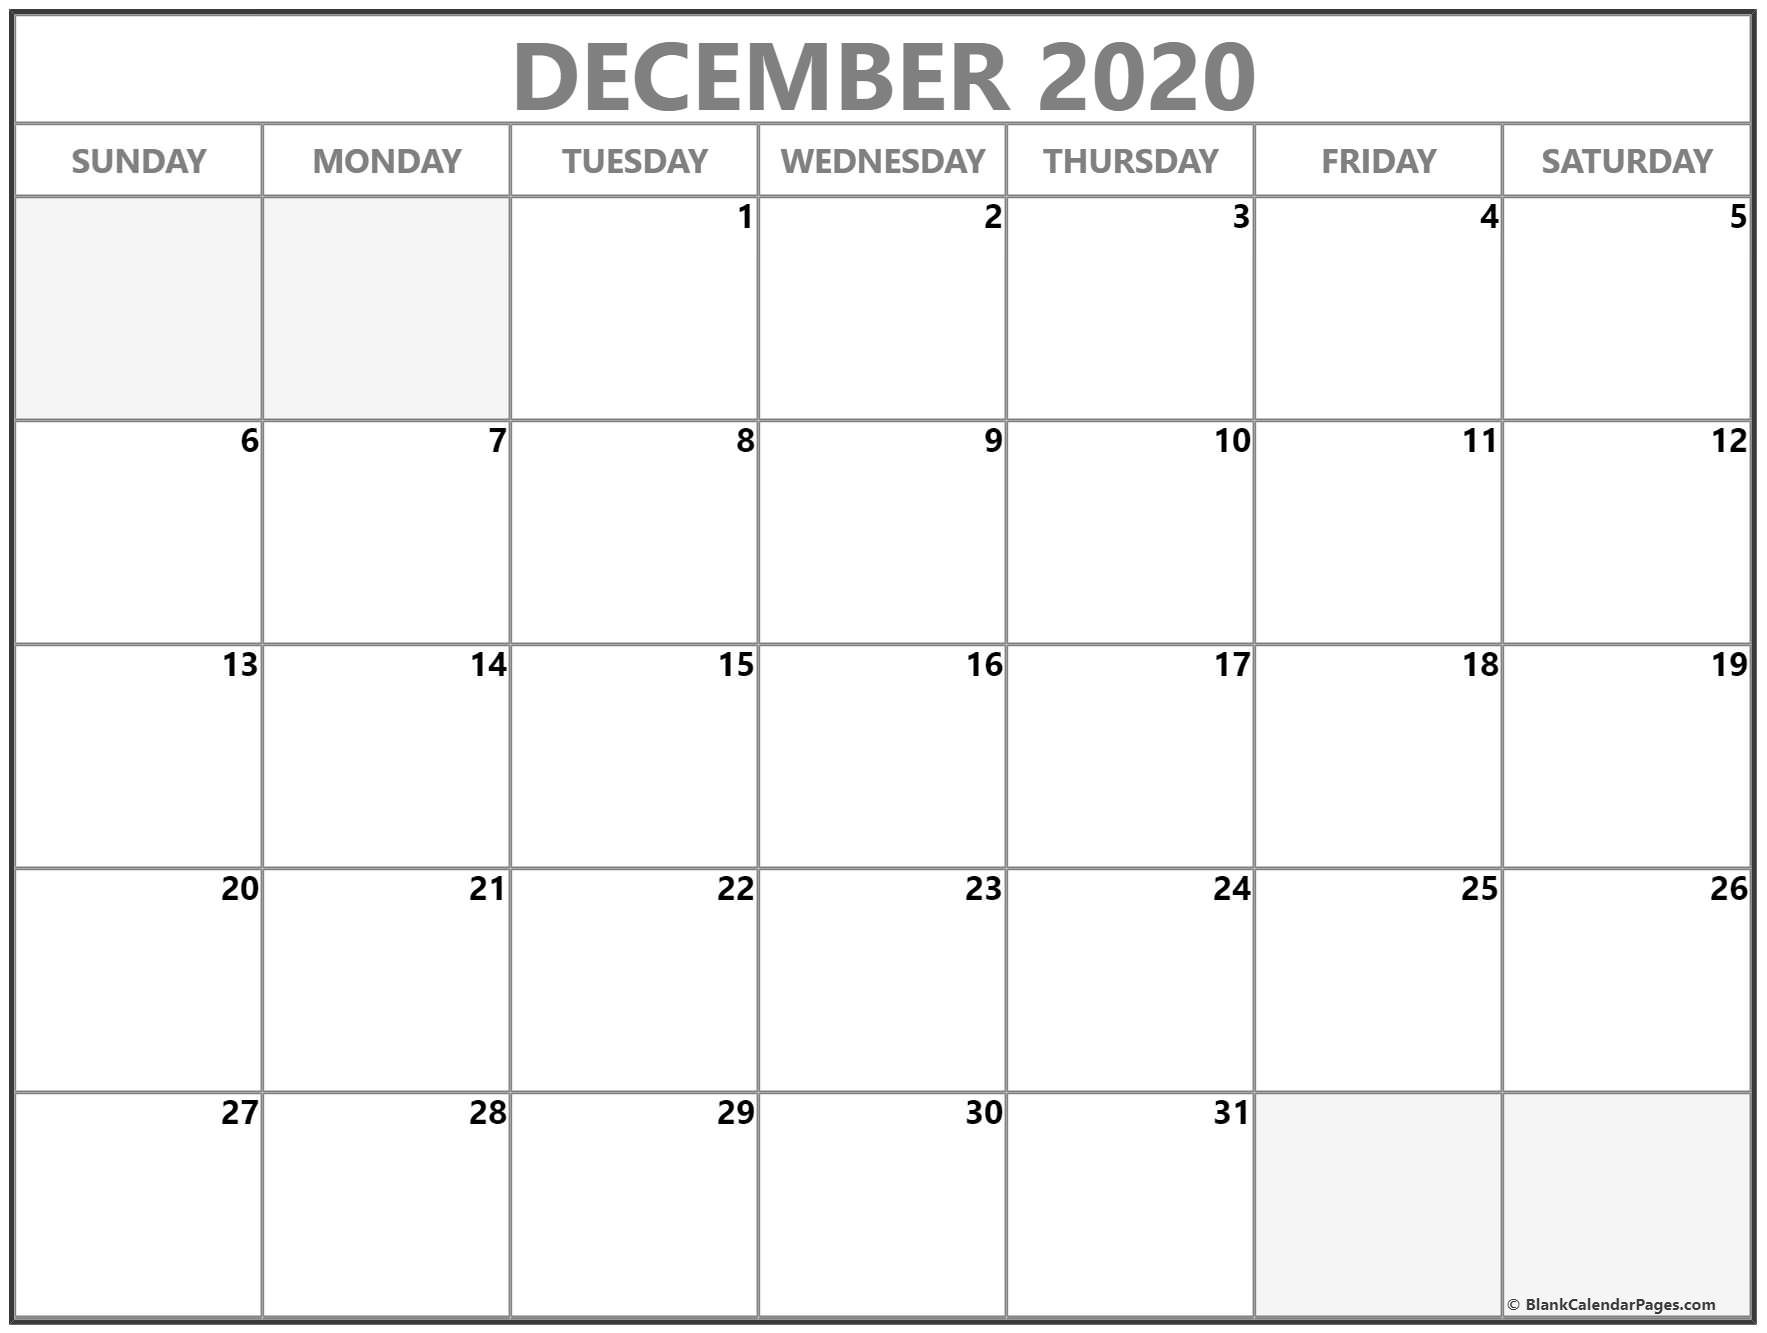 December 2020 calendar